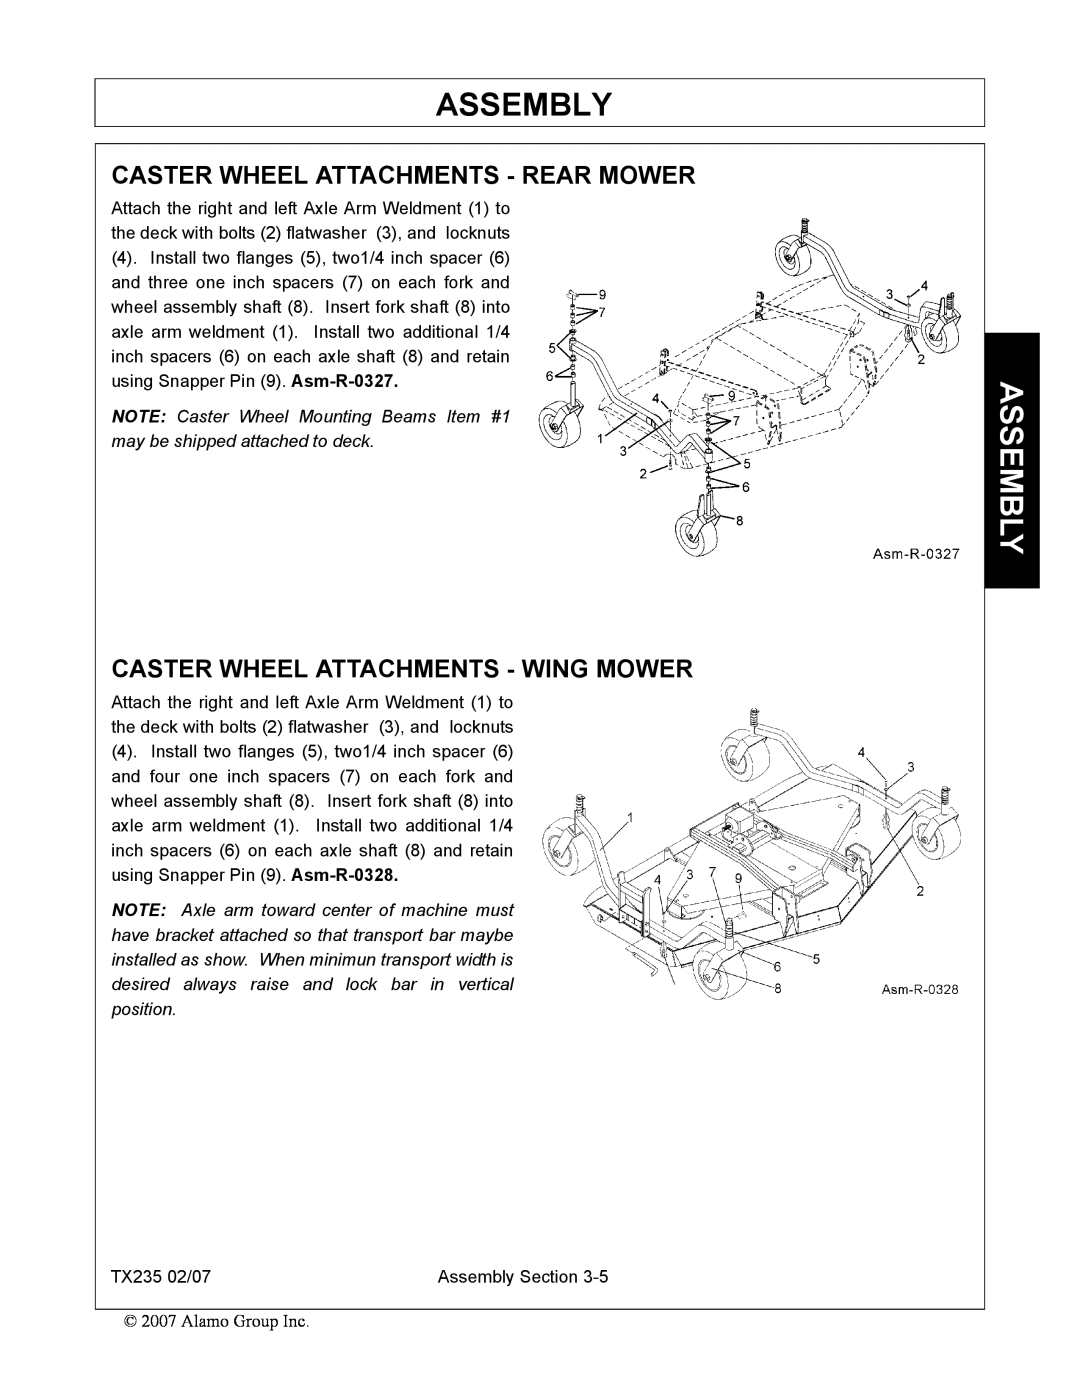 Alamo TX235 manual Caster Wheel Attachments - Rear Mower, Caster Wheel Attachments - Wing Mower, Assembly 